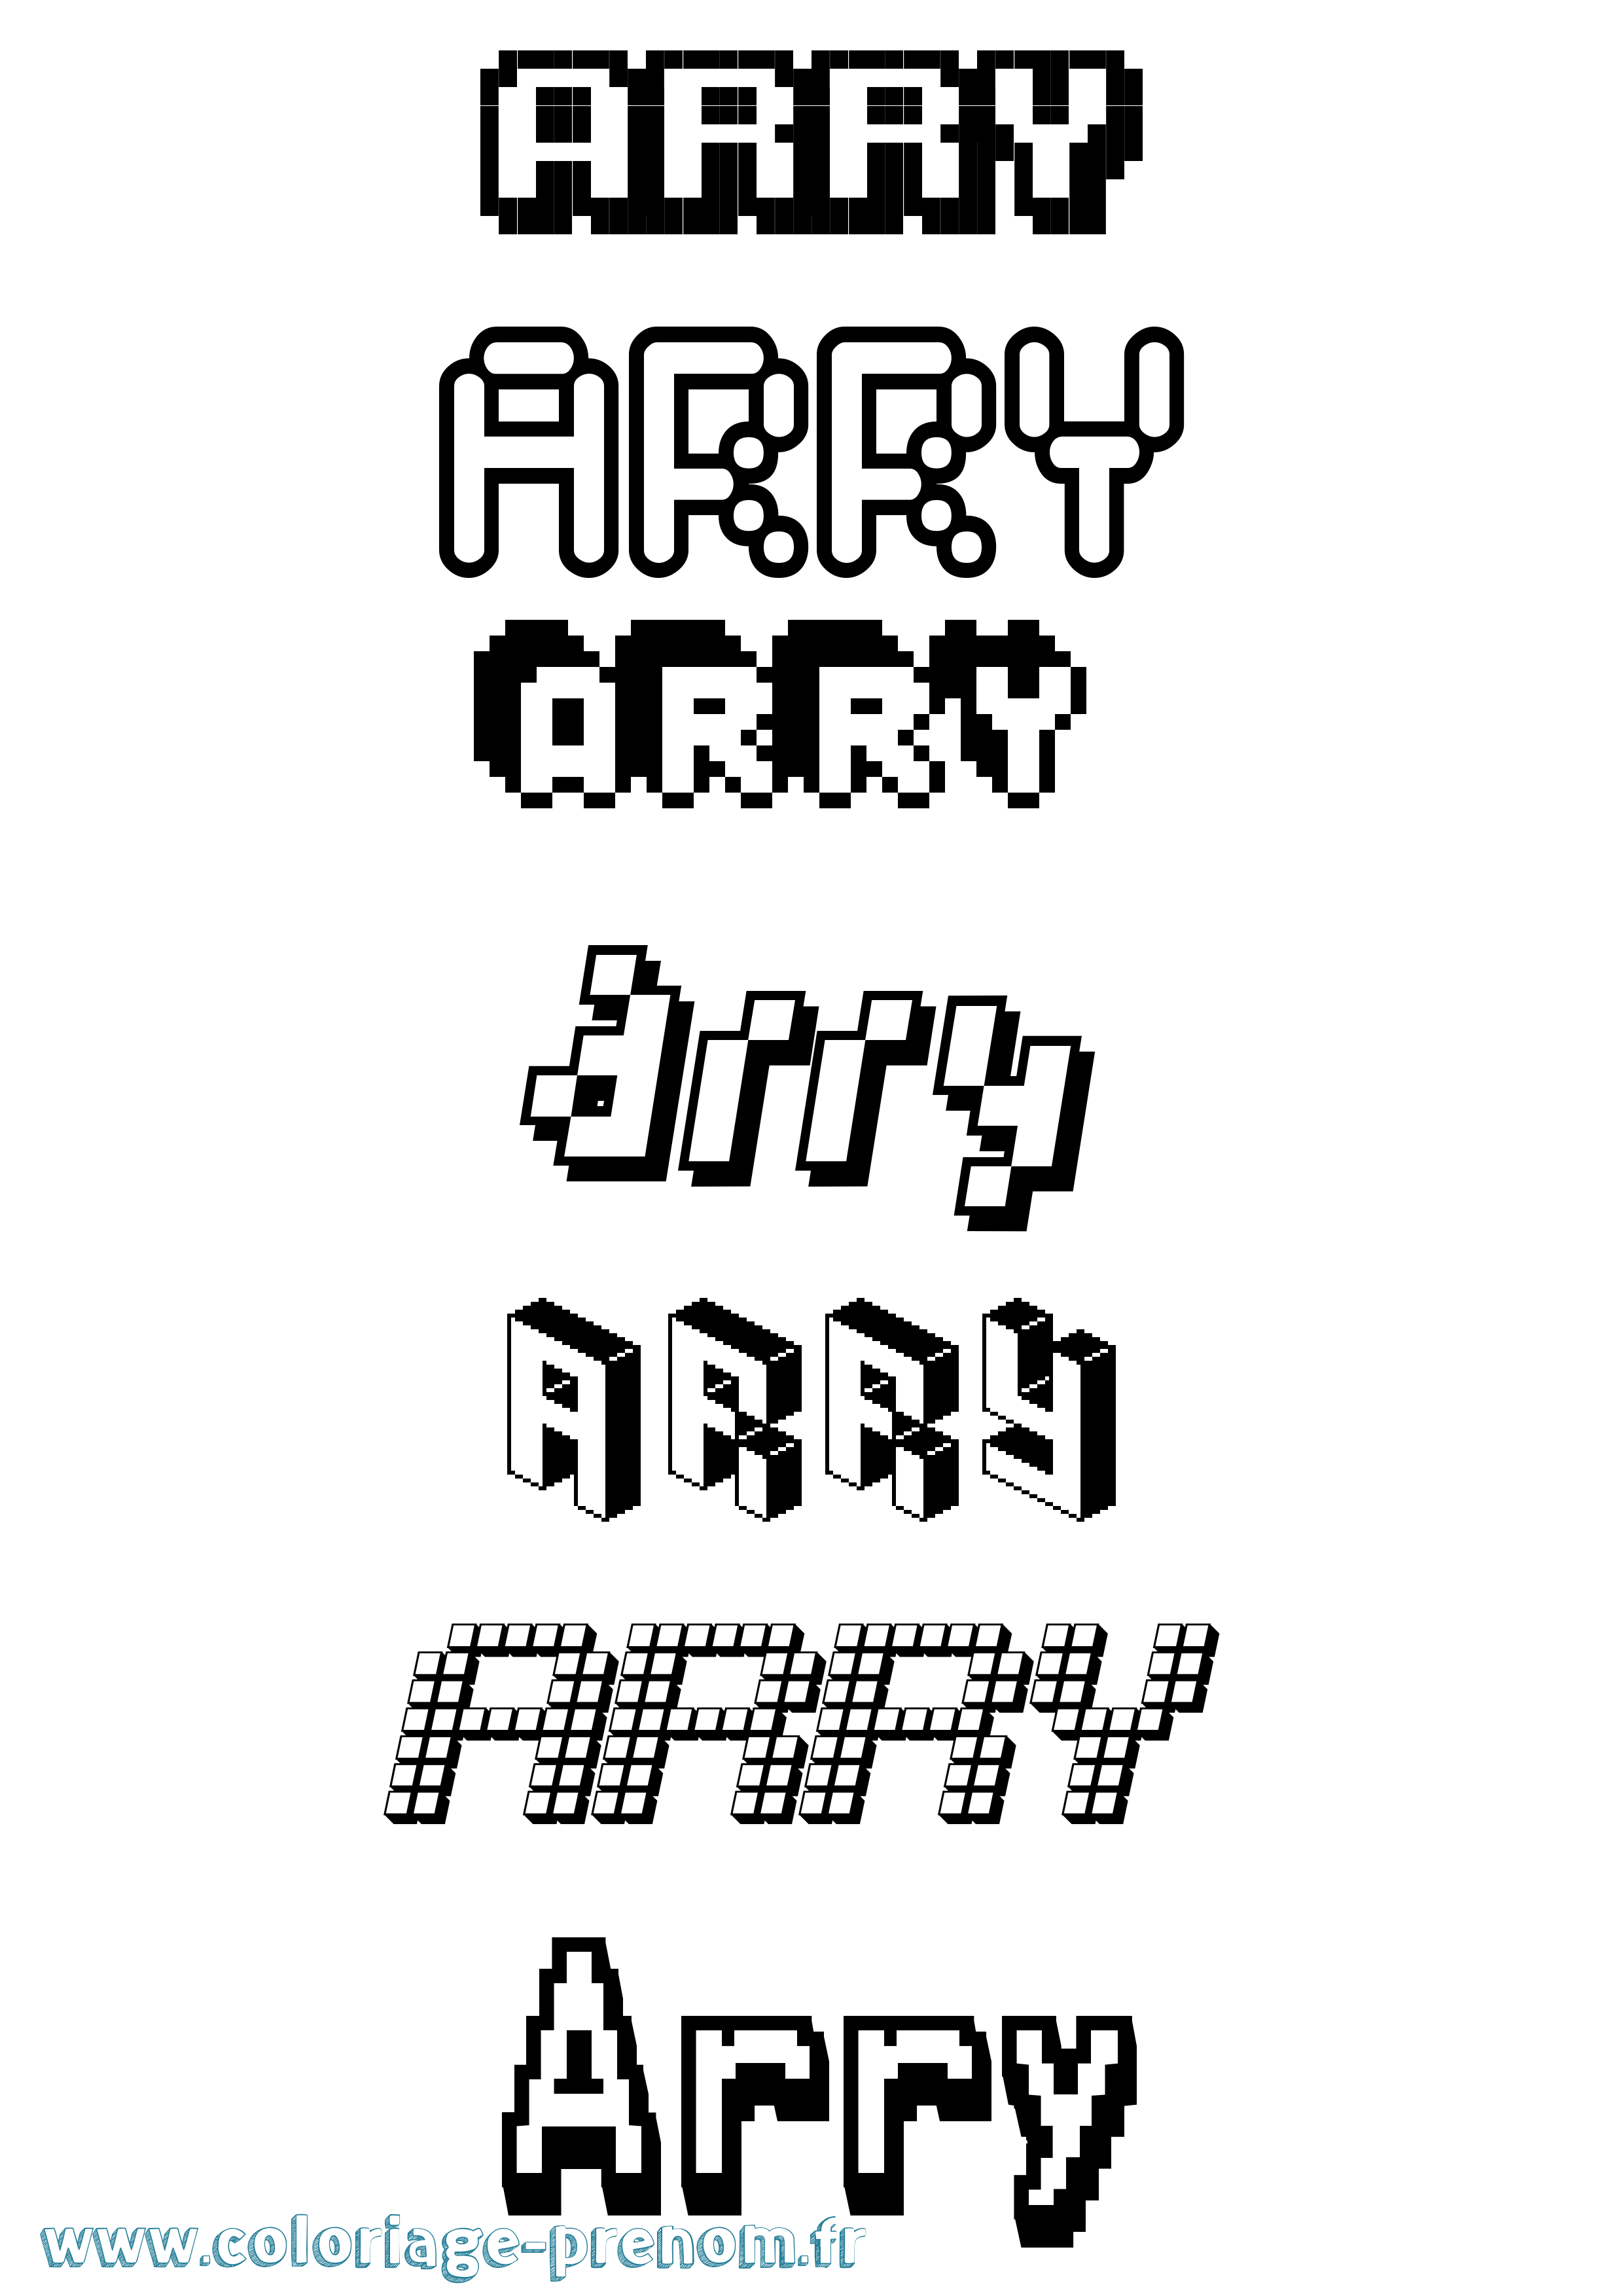 Coloriage prénom Arry Pixel